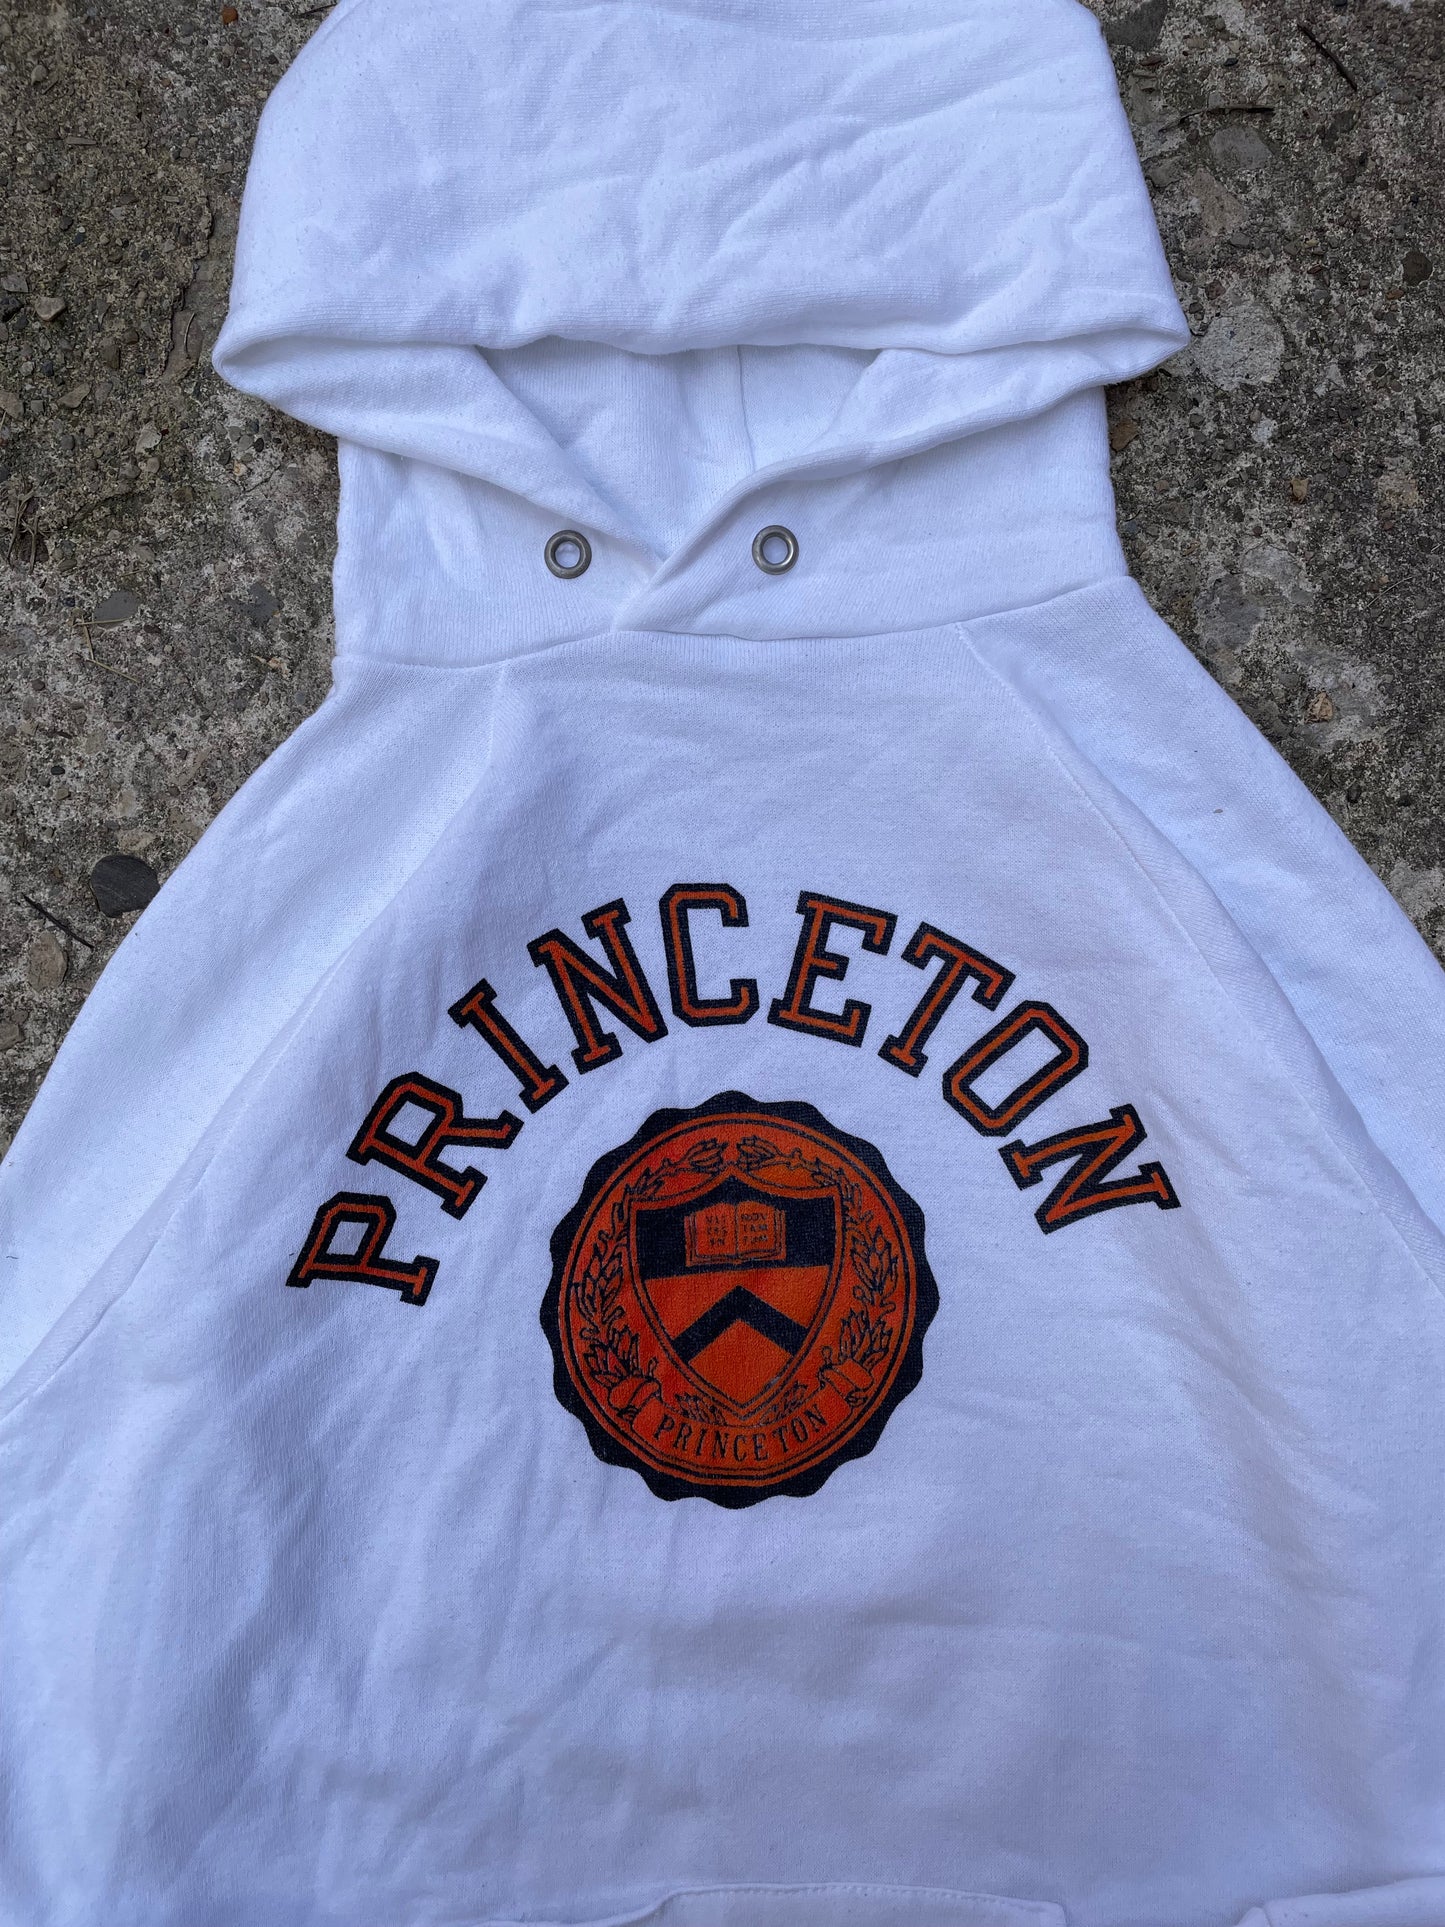 1980's Champion Princeton University Hoodie Sweatshirt - L